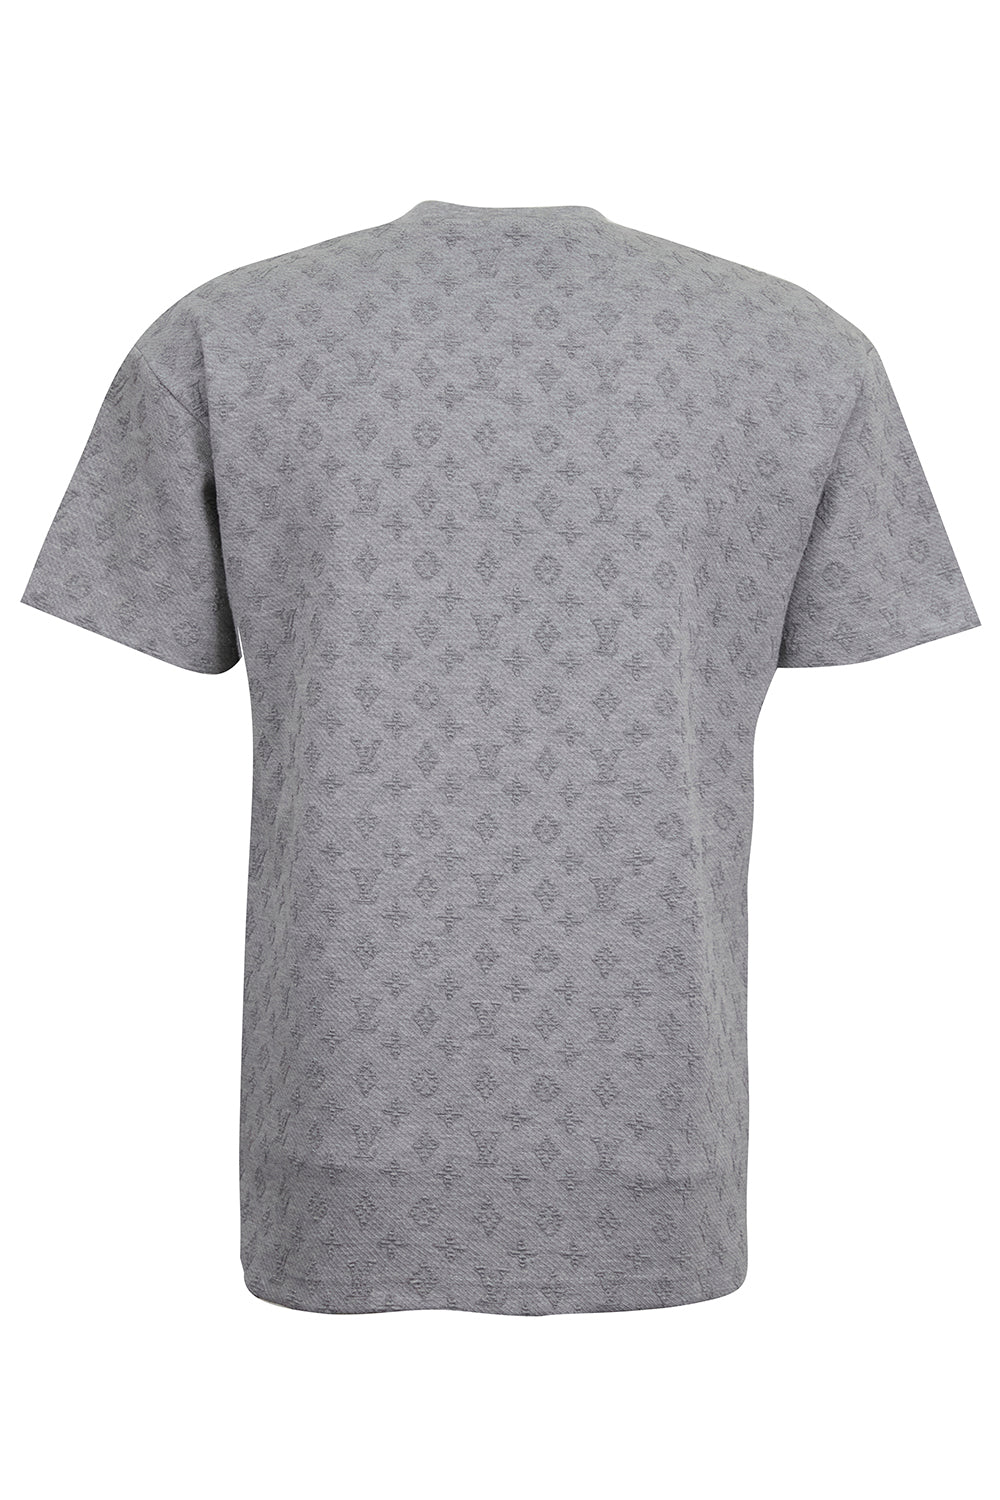 Louis Vuitton Signature 3D Pocket Monogram T-Shirt, Black, L (Stock Confirmation Required)